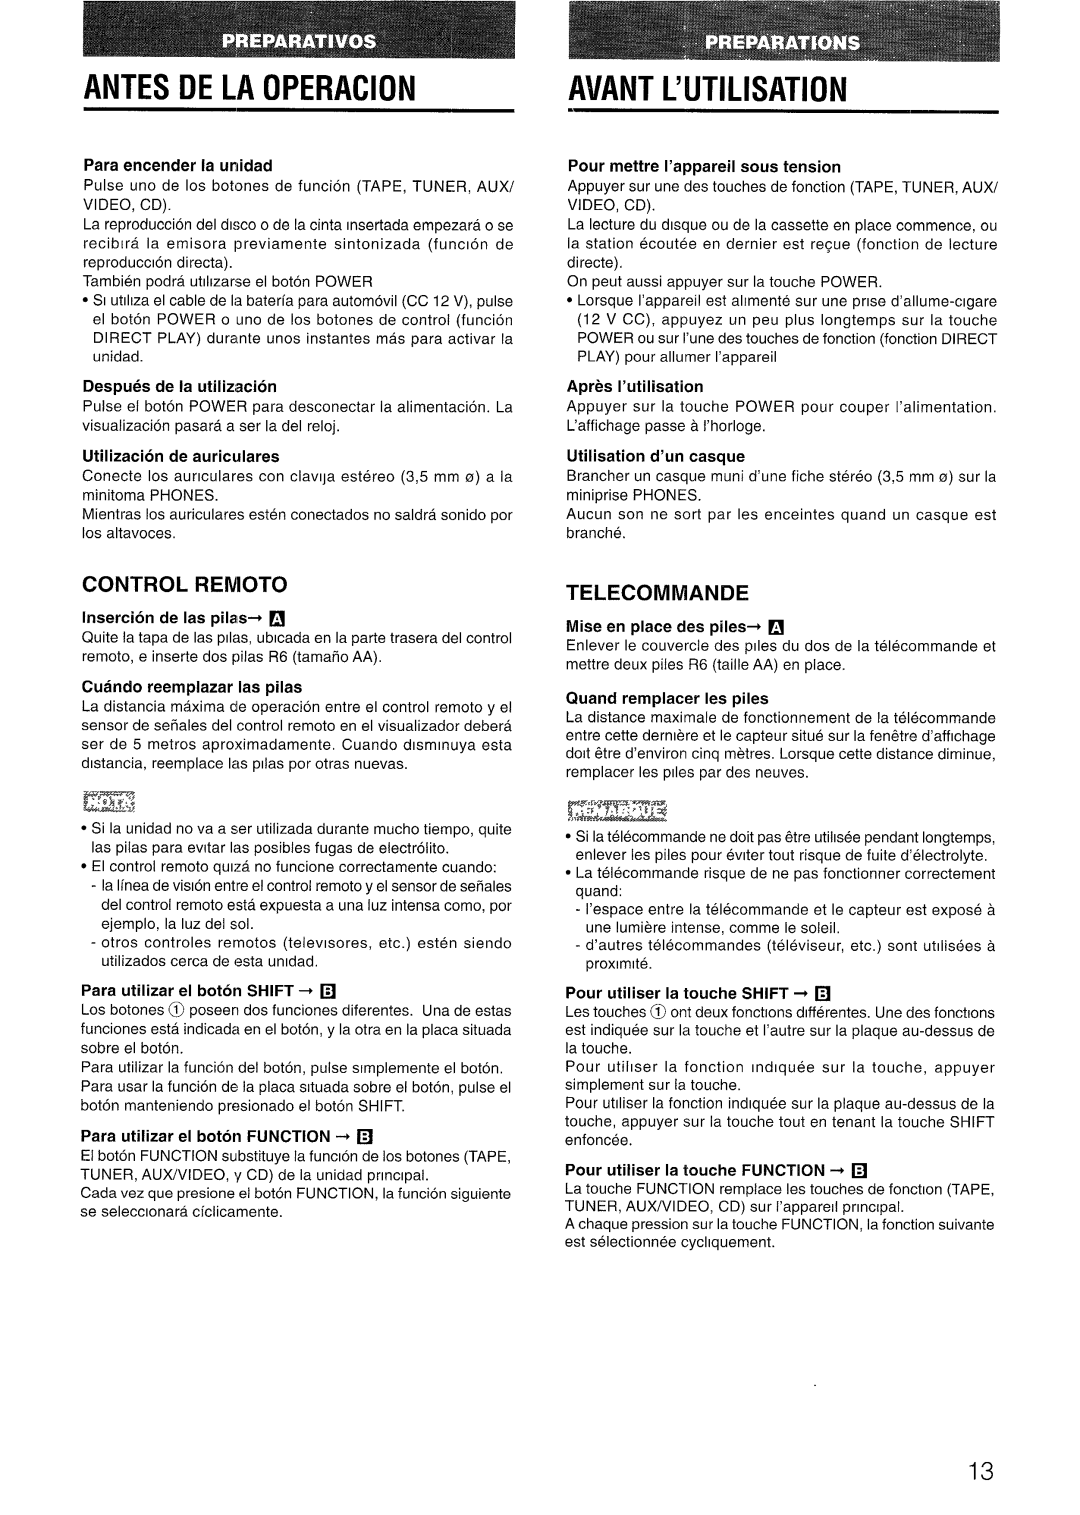 Aiwa LCX-301 manual Antes De La Operacion, Avant L’Utilisation, Control Remoto, Telecommande, E??J, Para encender la unidad 